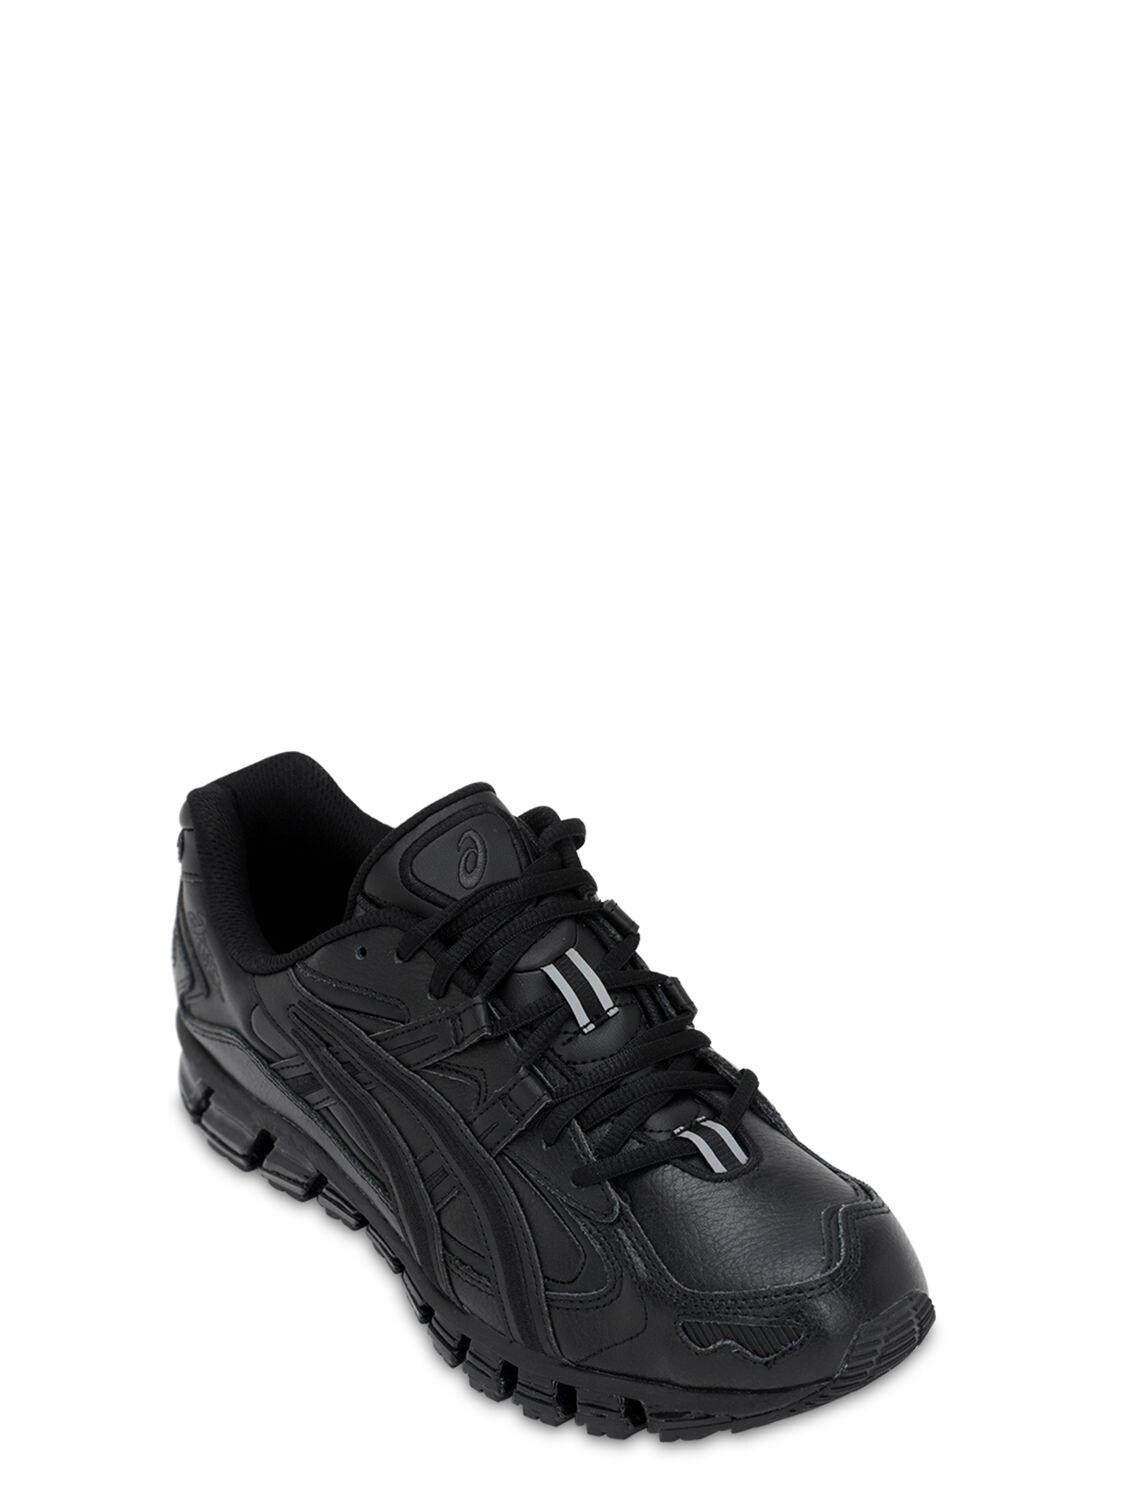 Asics Gel-kayano 5 360 Leather Sneakers in Black - Lyst